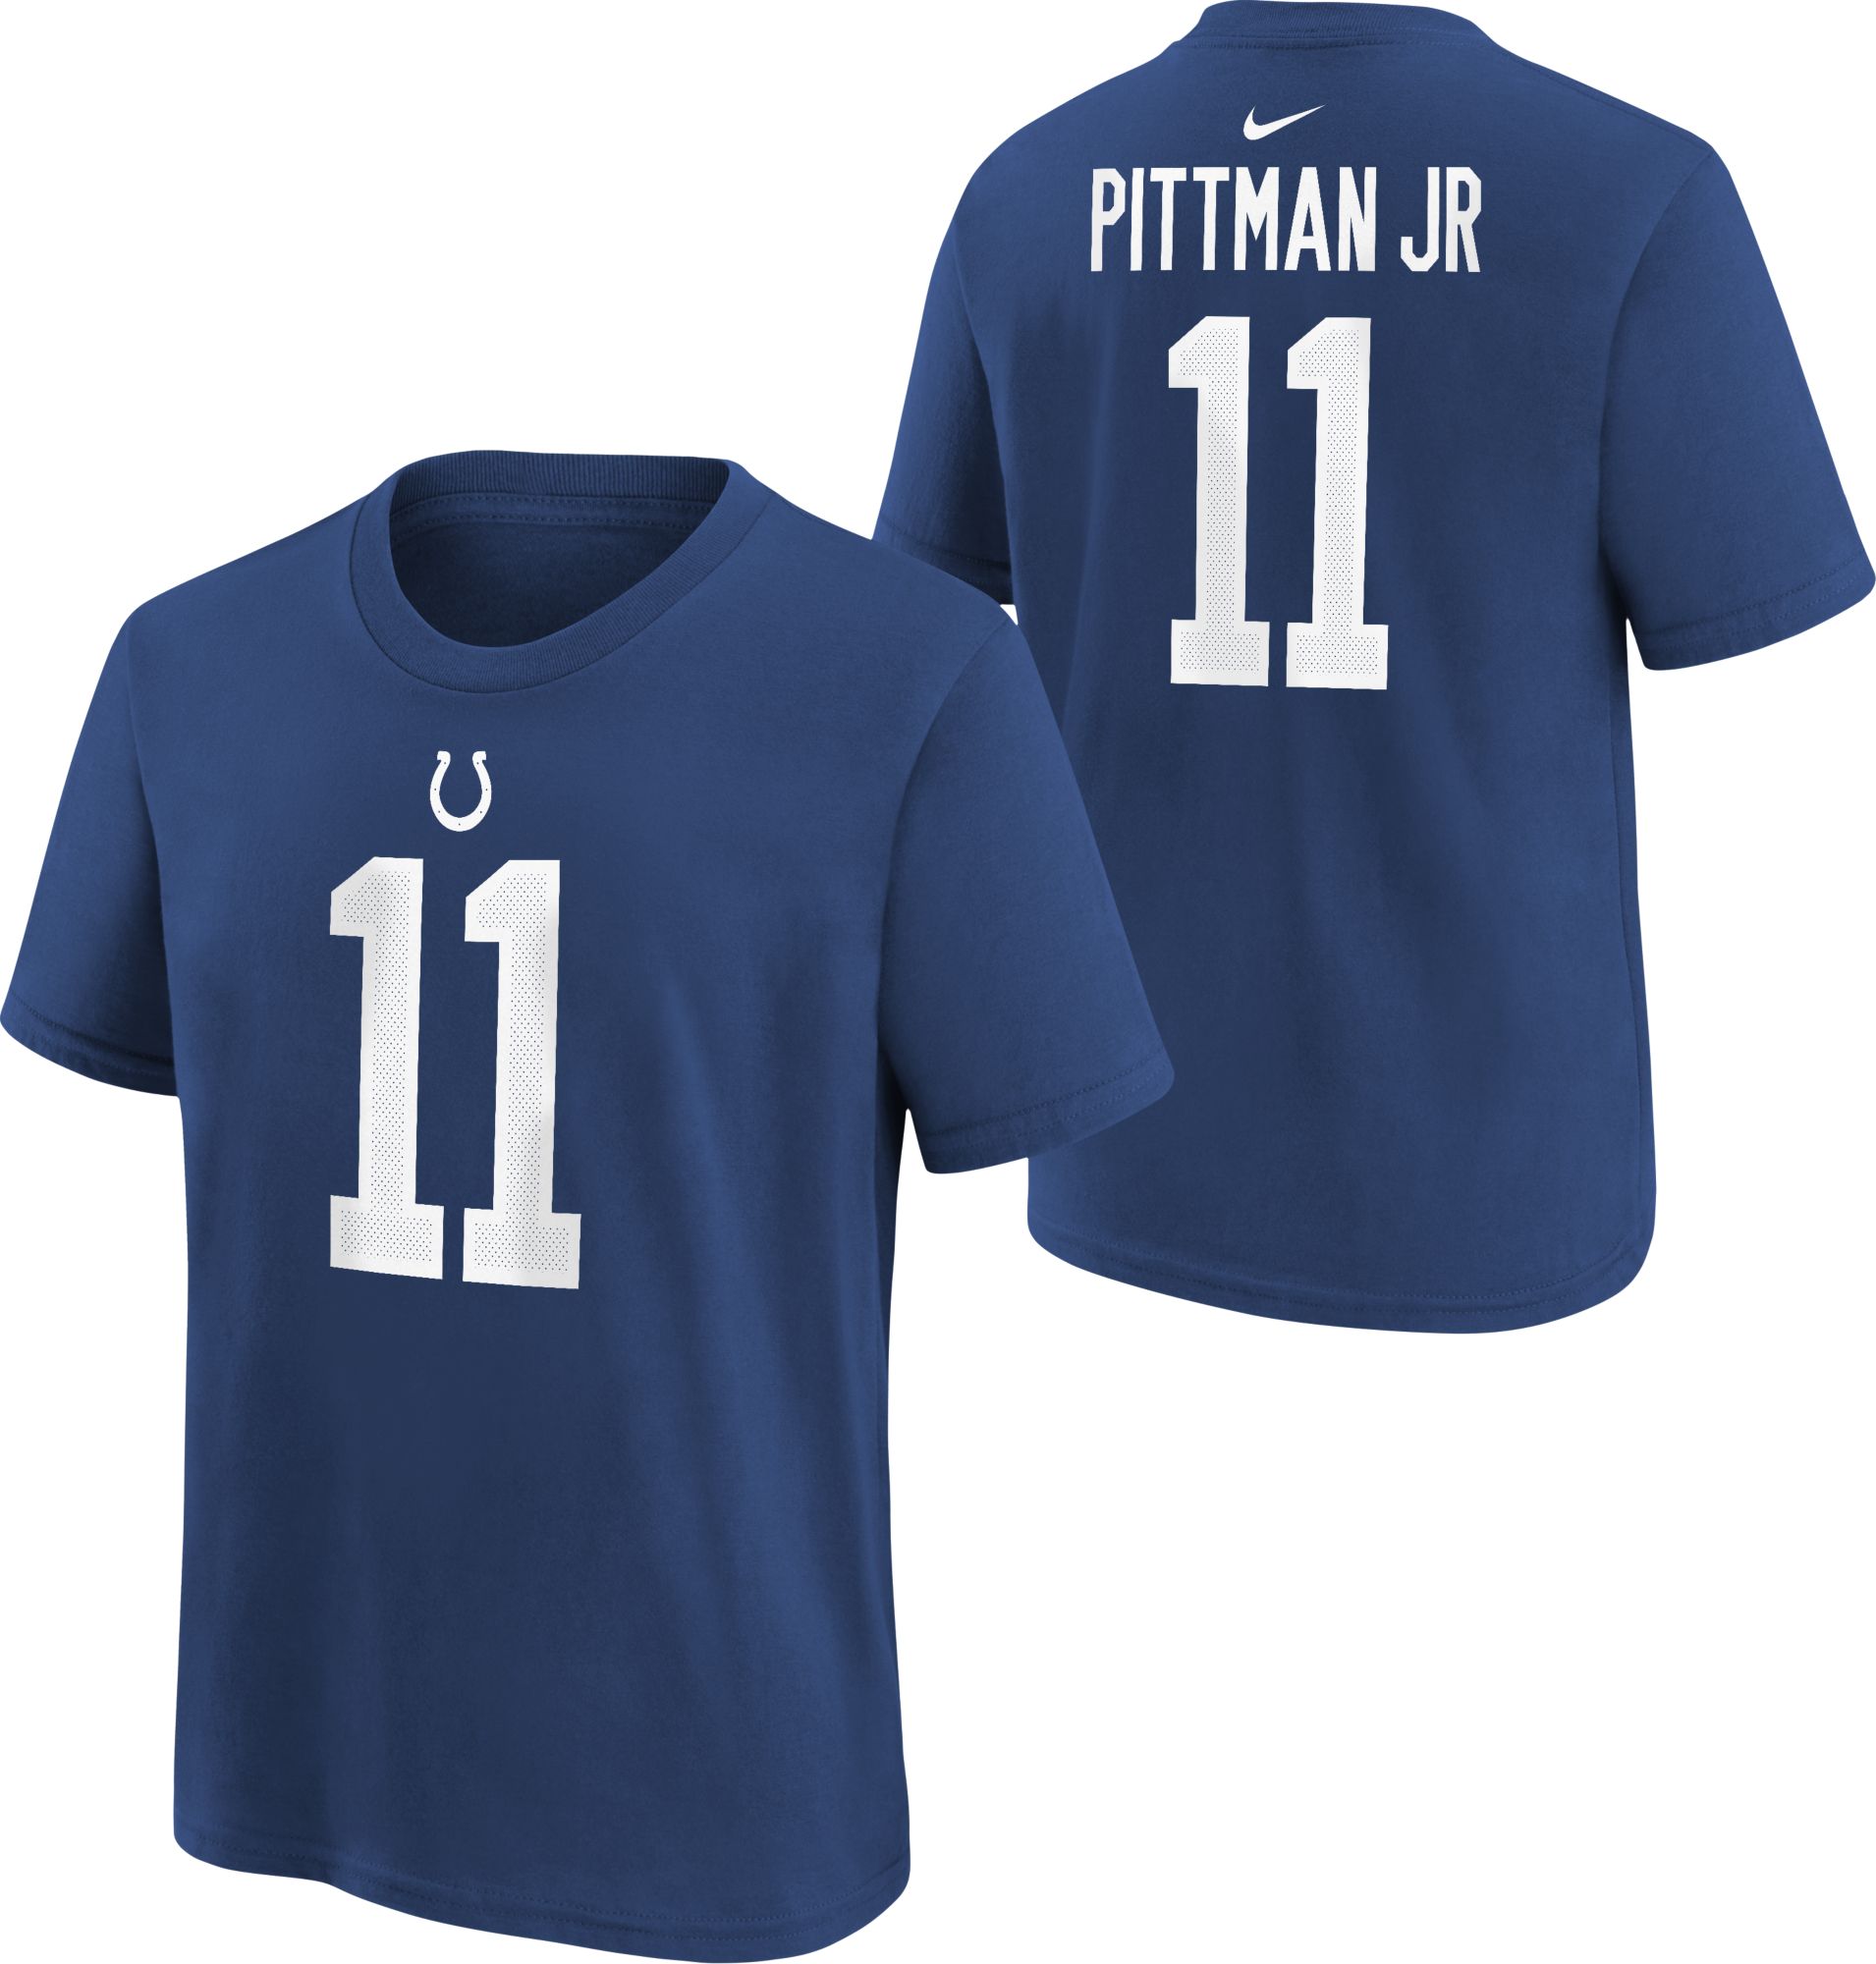 Pittman Jr. Michael youth jersey